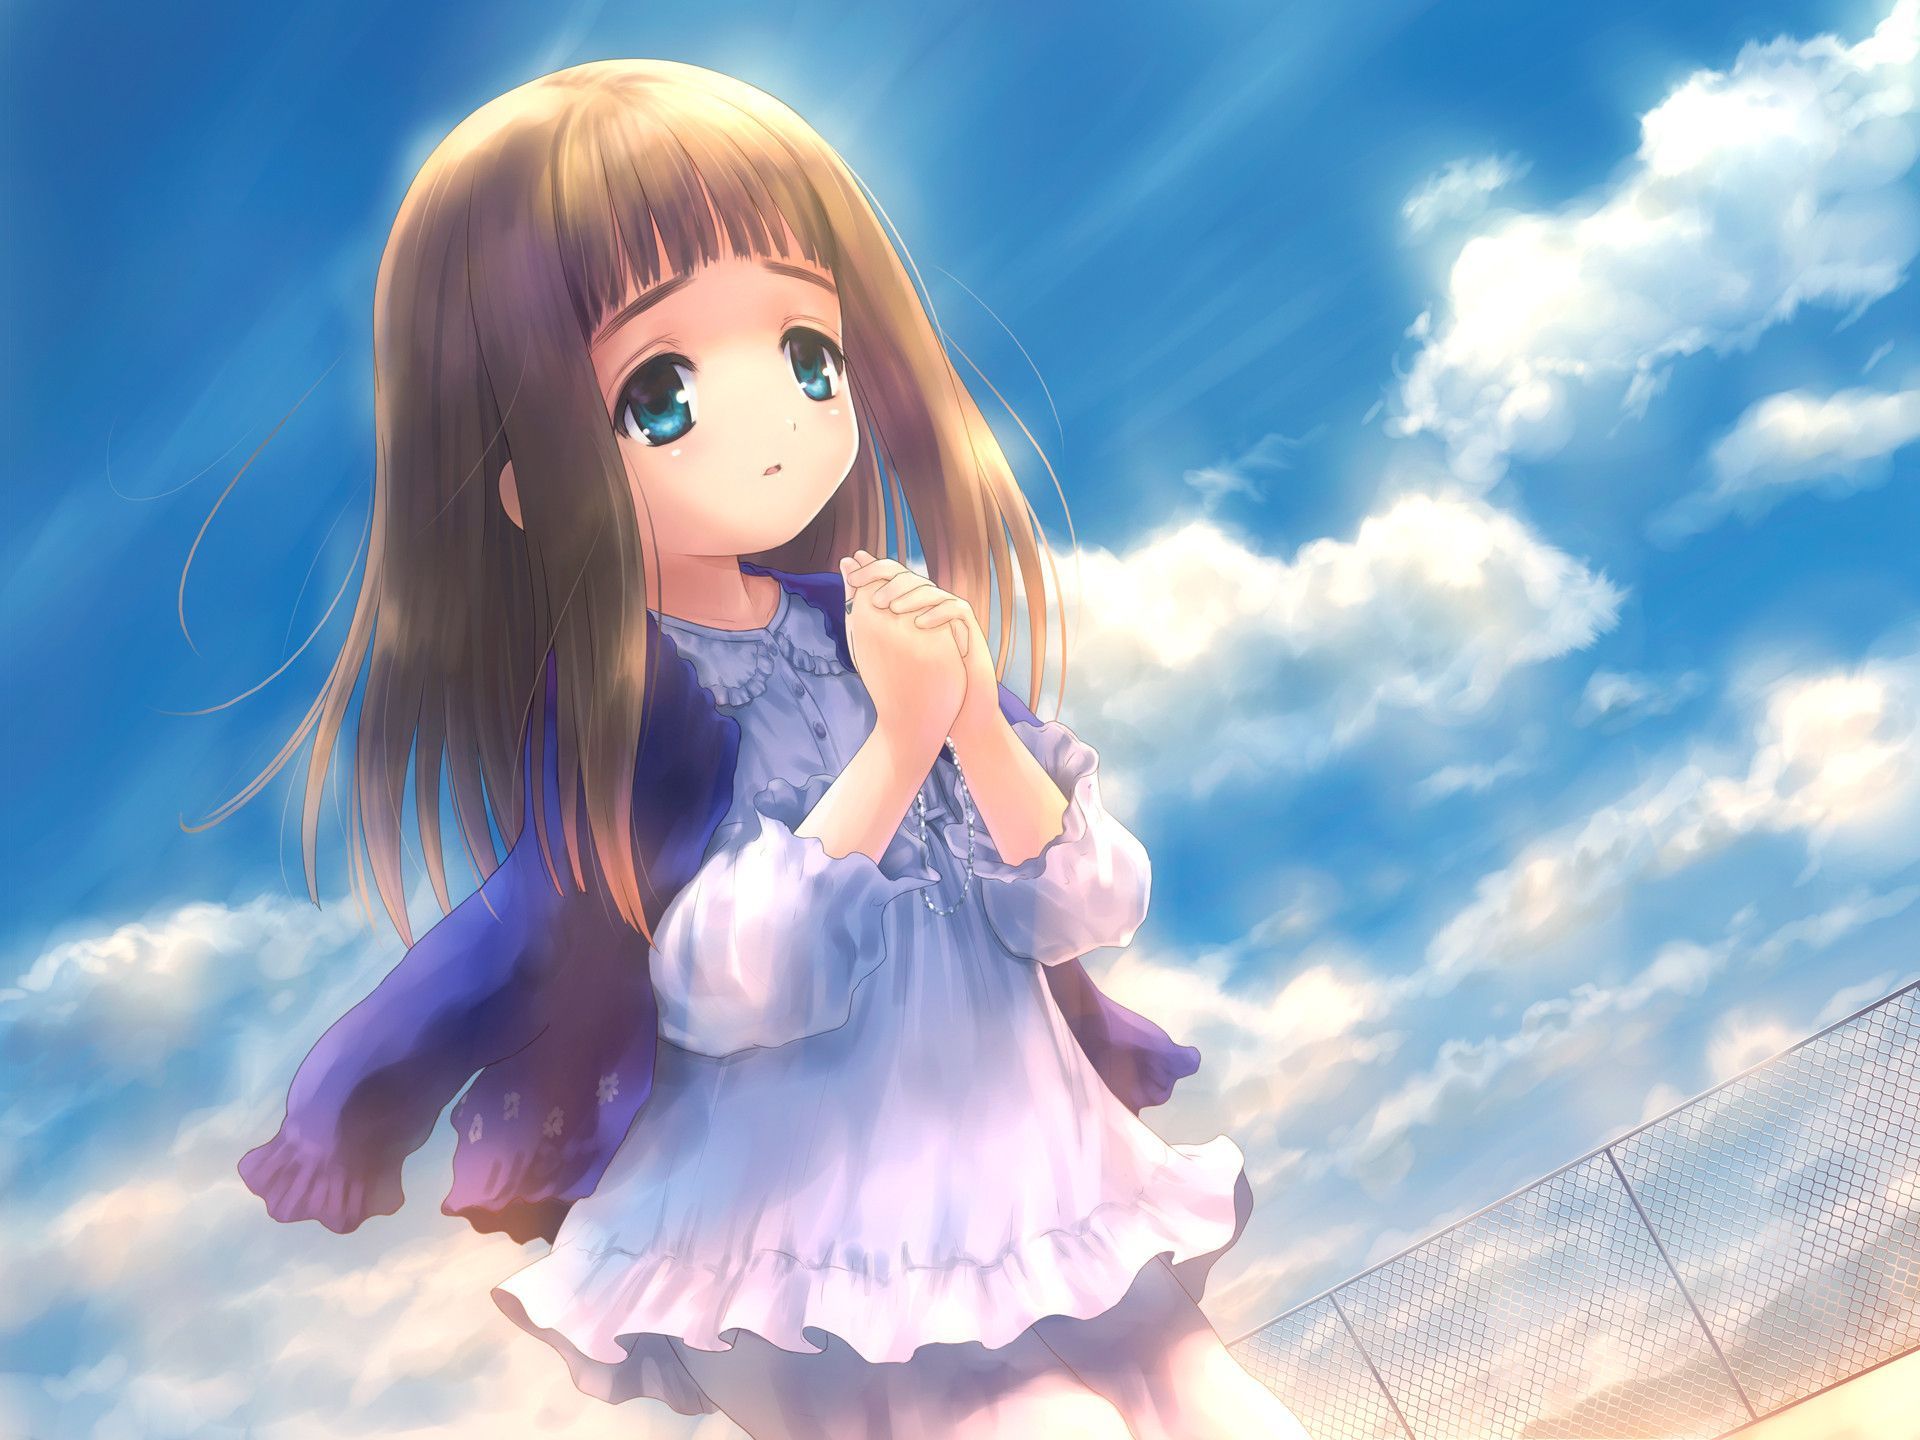 Cute anime chibi little girl cartoon style Vector Image